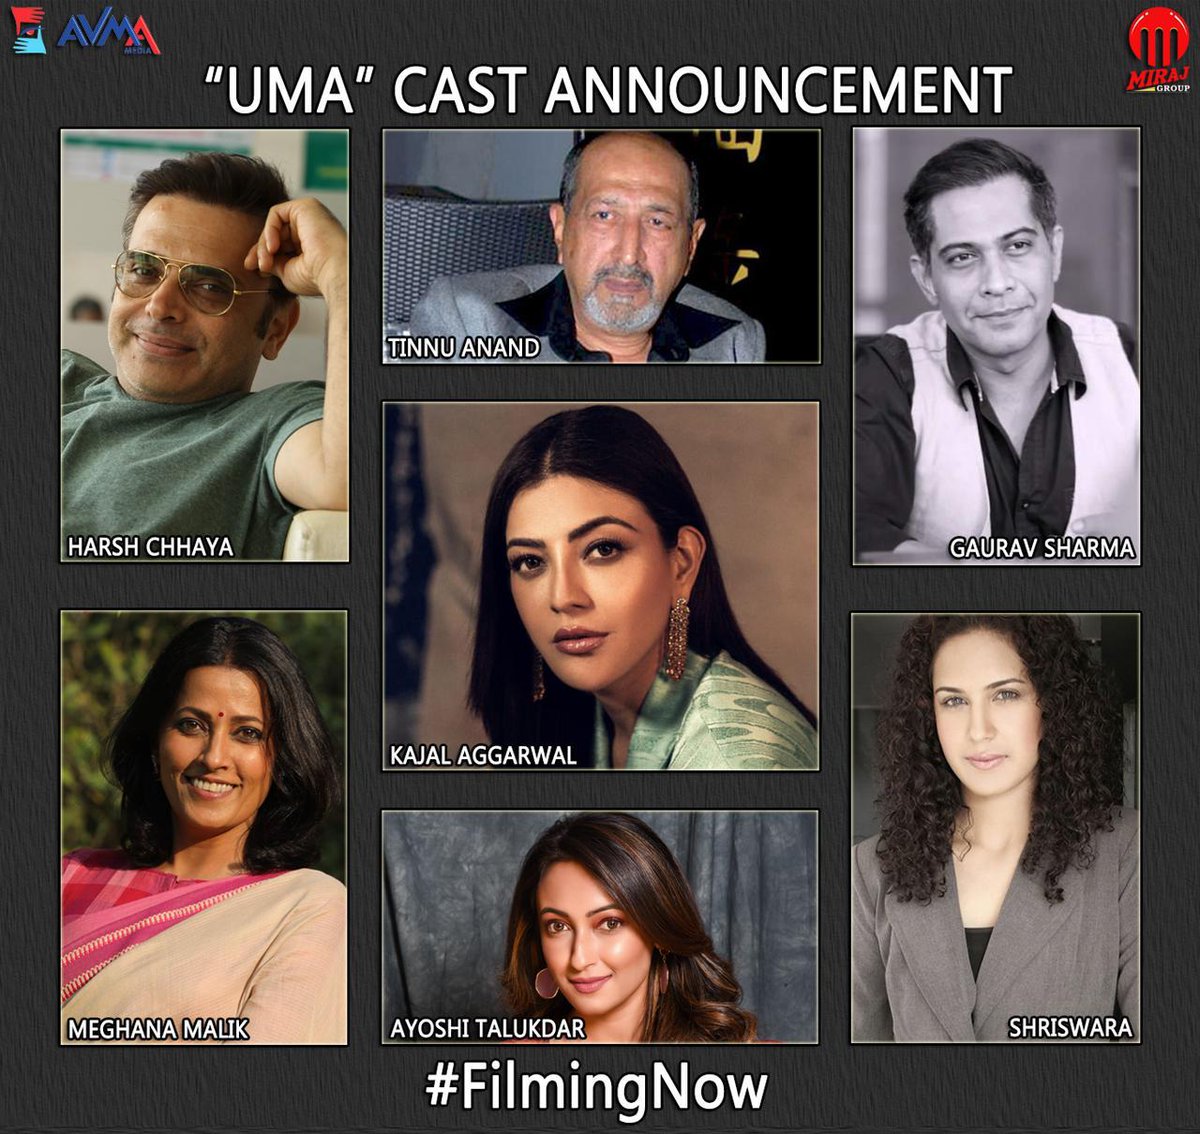 .@MsKajalAggarwal “UMA” directed by #Tathagatasingha starts shooting in Kolkata today. The film produced by @G_Avishek (AVMA Media) & @Mantraraj27 (Miraj Creations), also stars #TinnuAnand, #HarshChhaya, @meghna1malik, #GauravSharma, #Shriswara and @ayoshitalukdar.